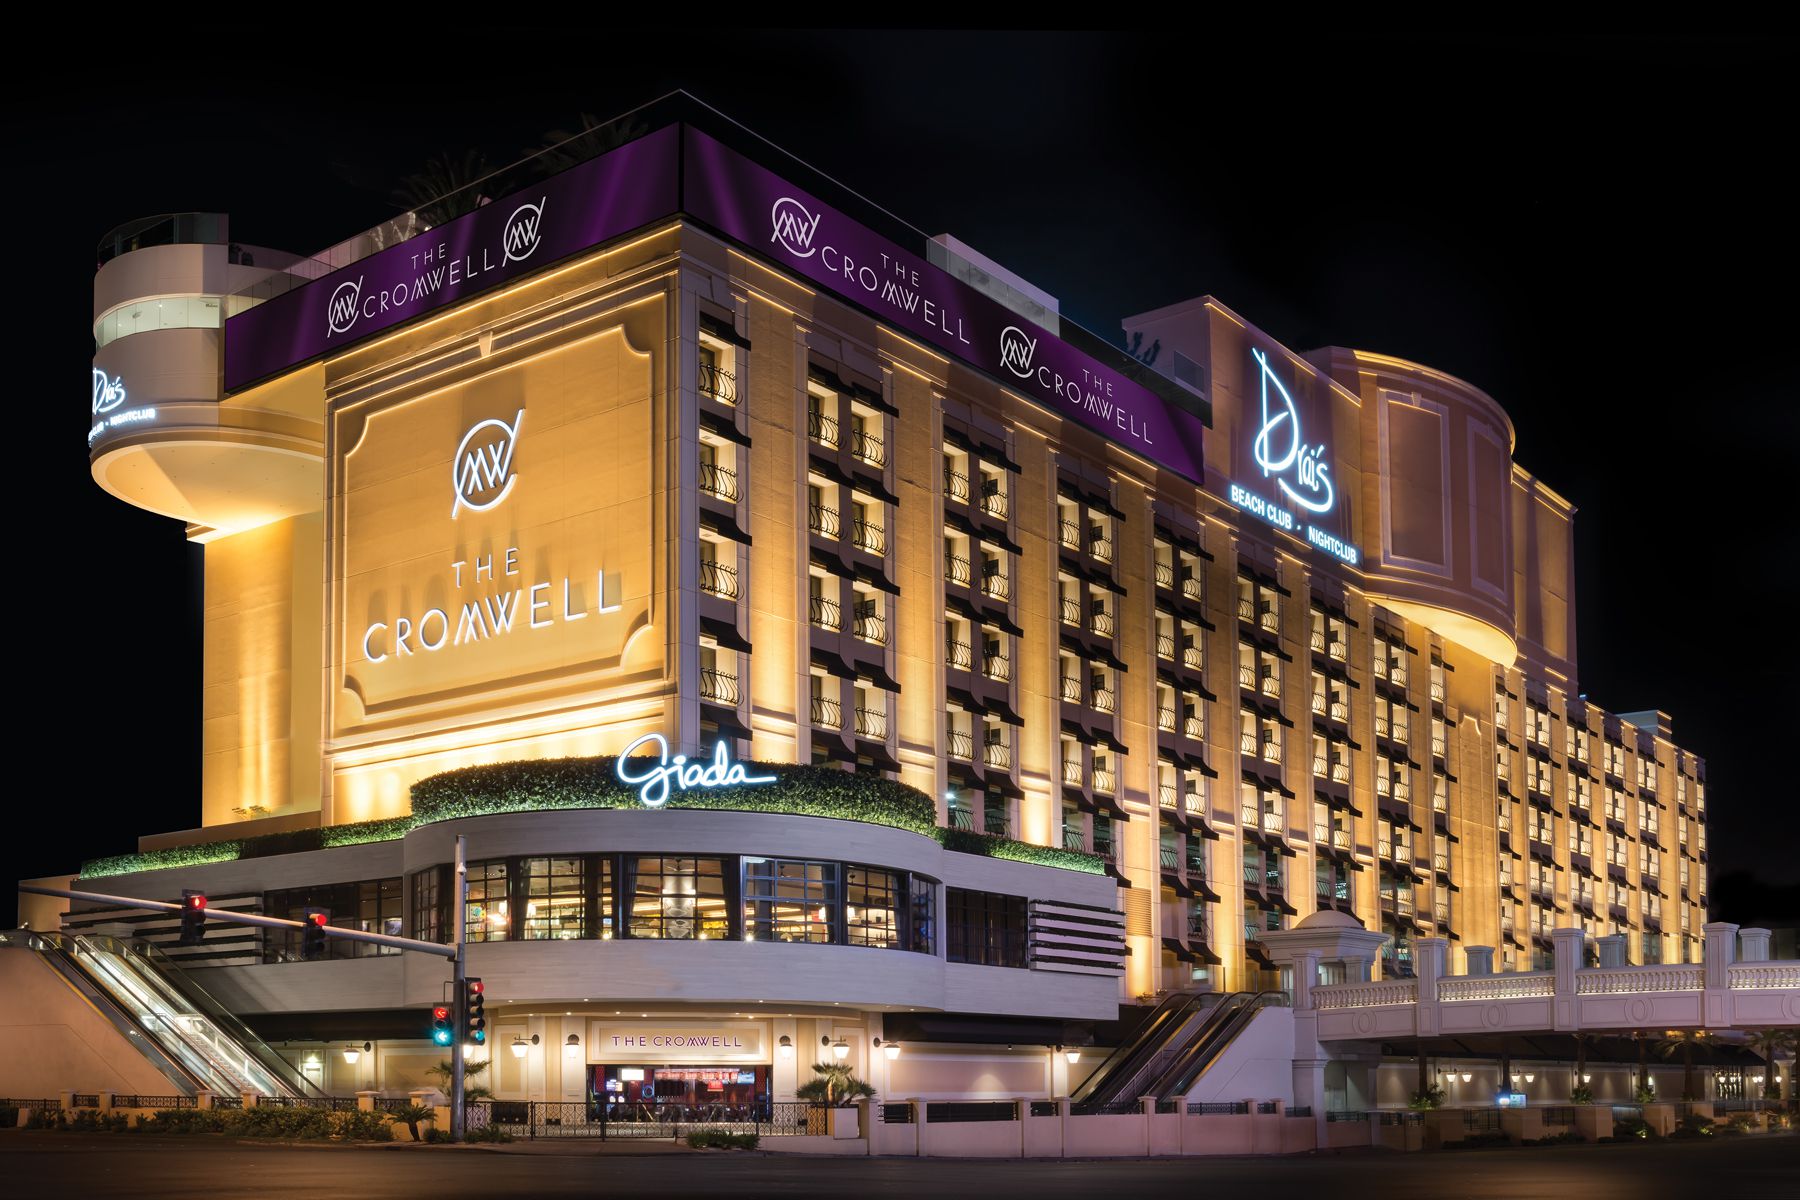 Cromwell Hotel on the Las Vegas Strip